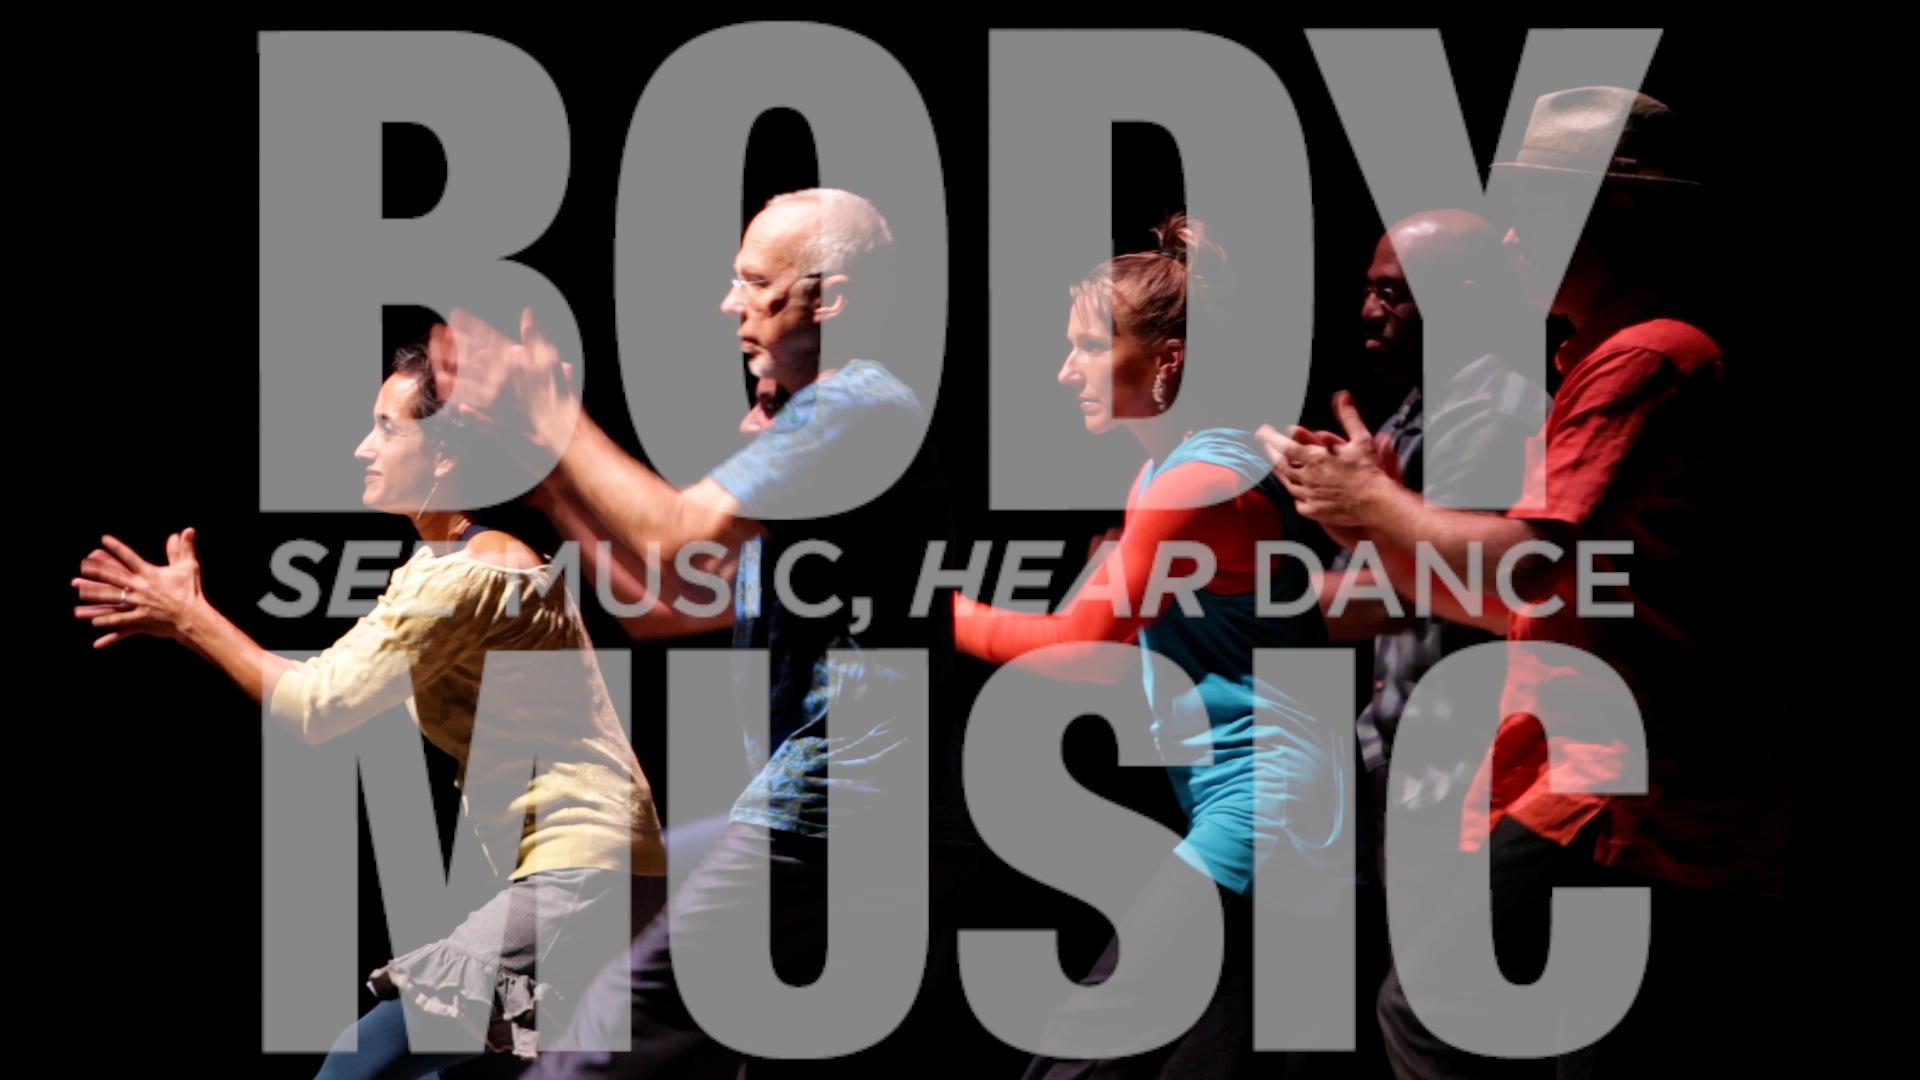 Боди Мьюзик. The Musical body. Body Music. Hear dance